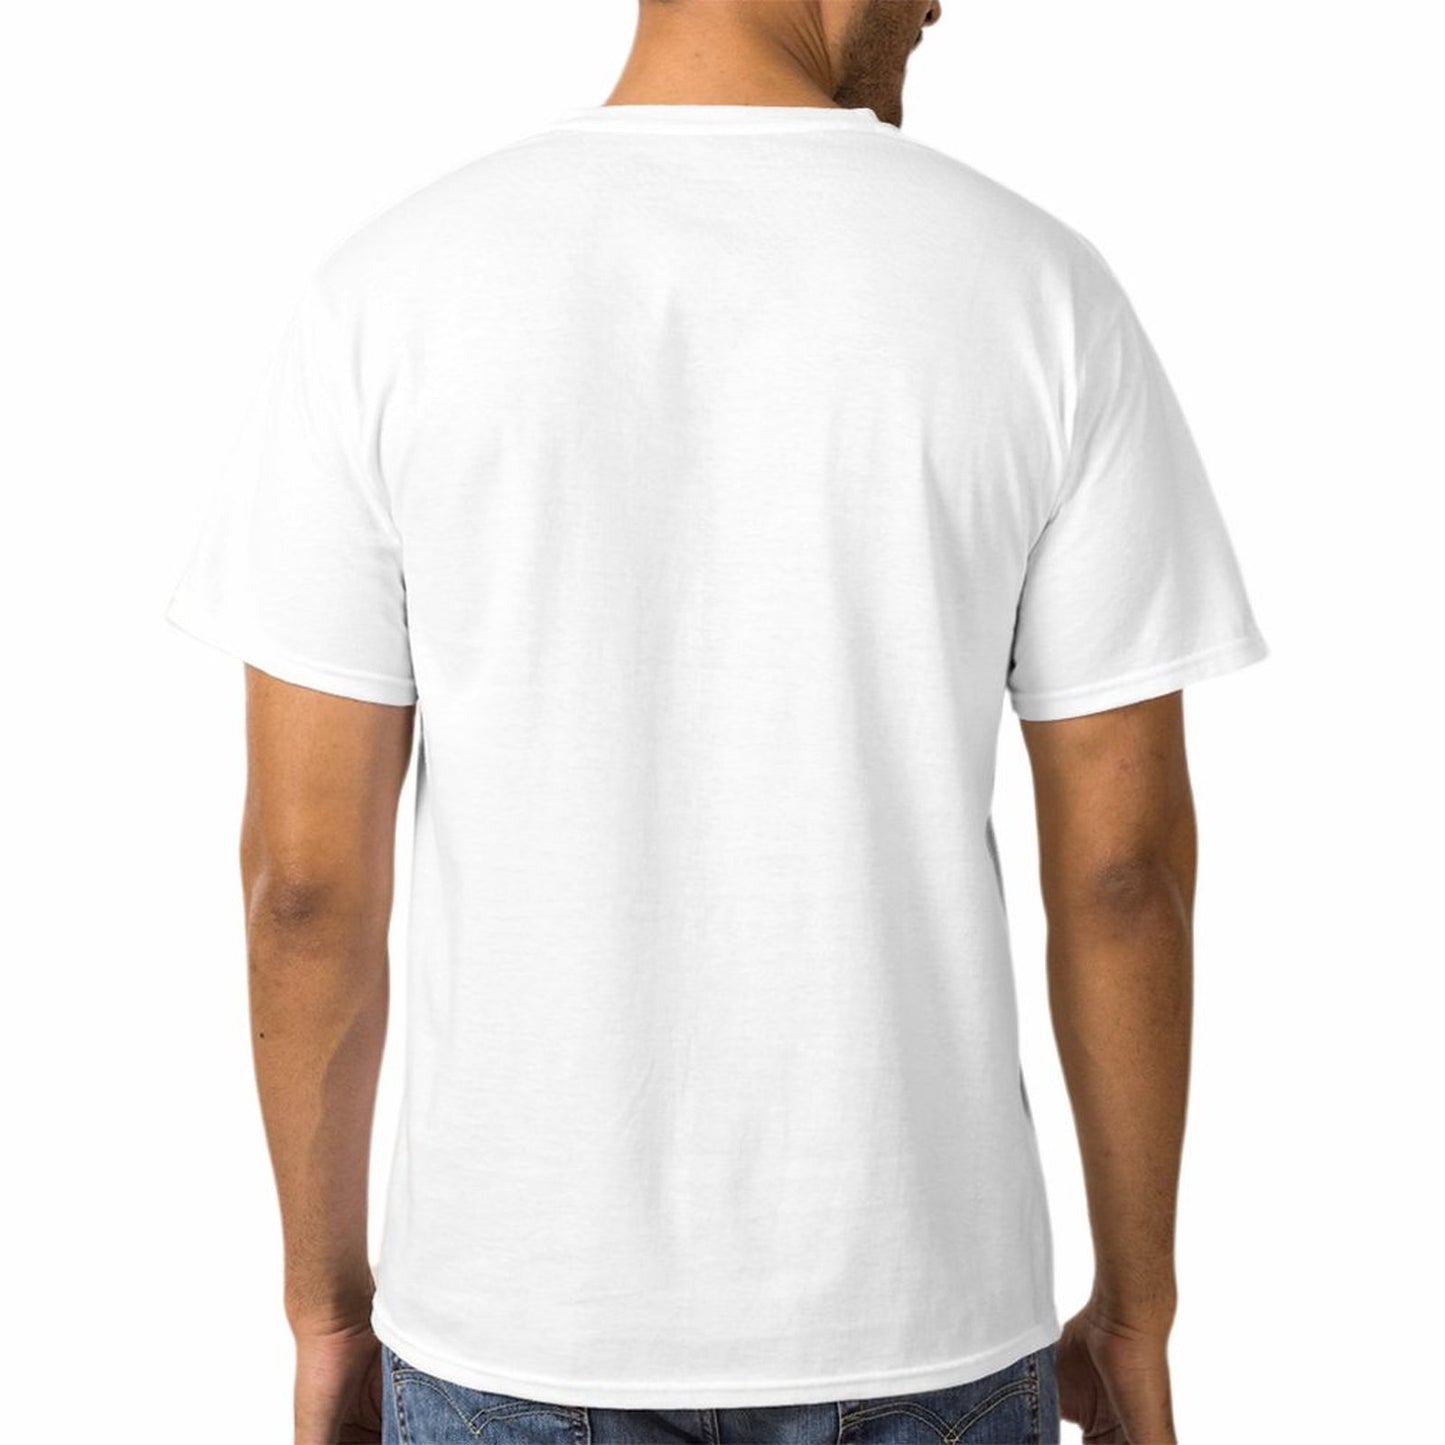 Online DIY T-shirt for Men Women Unisex Short-sleeve Shirt Printed X